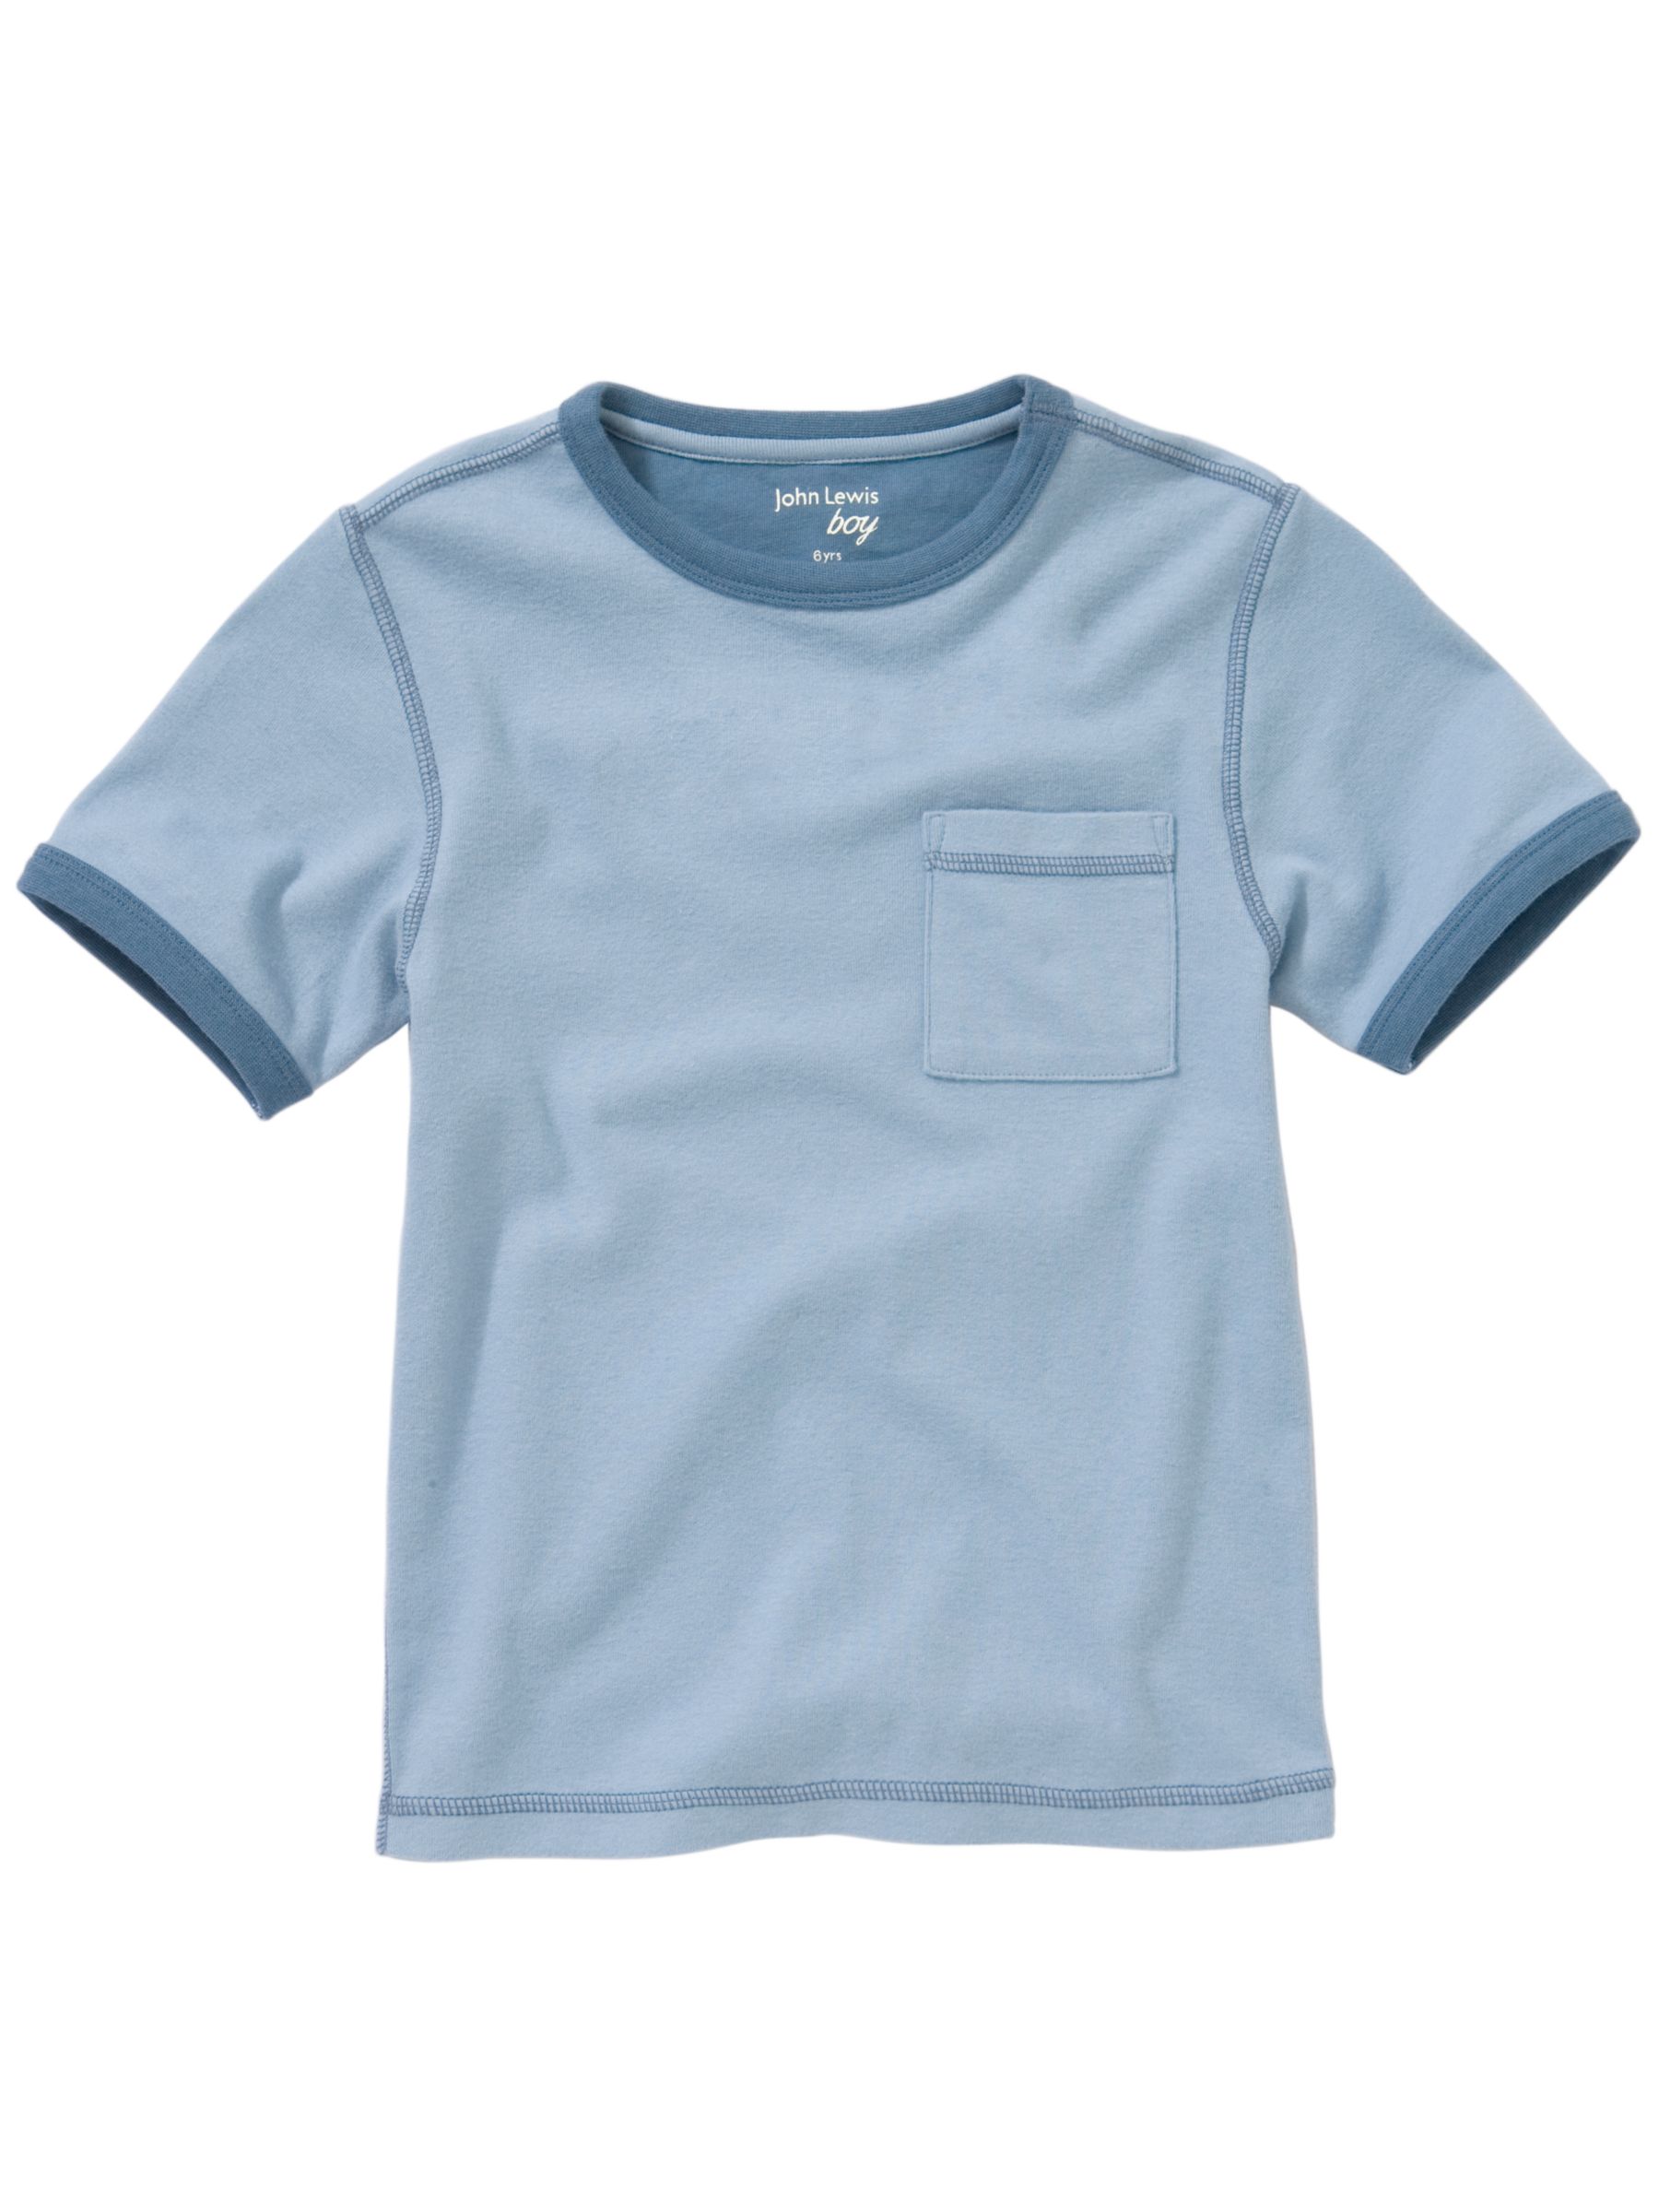 John Lewis Boy Short Sleeve T-Shirt, Blue, 6 years